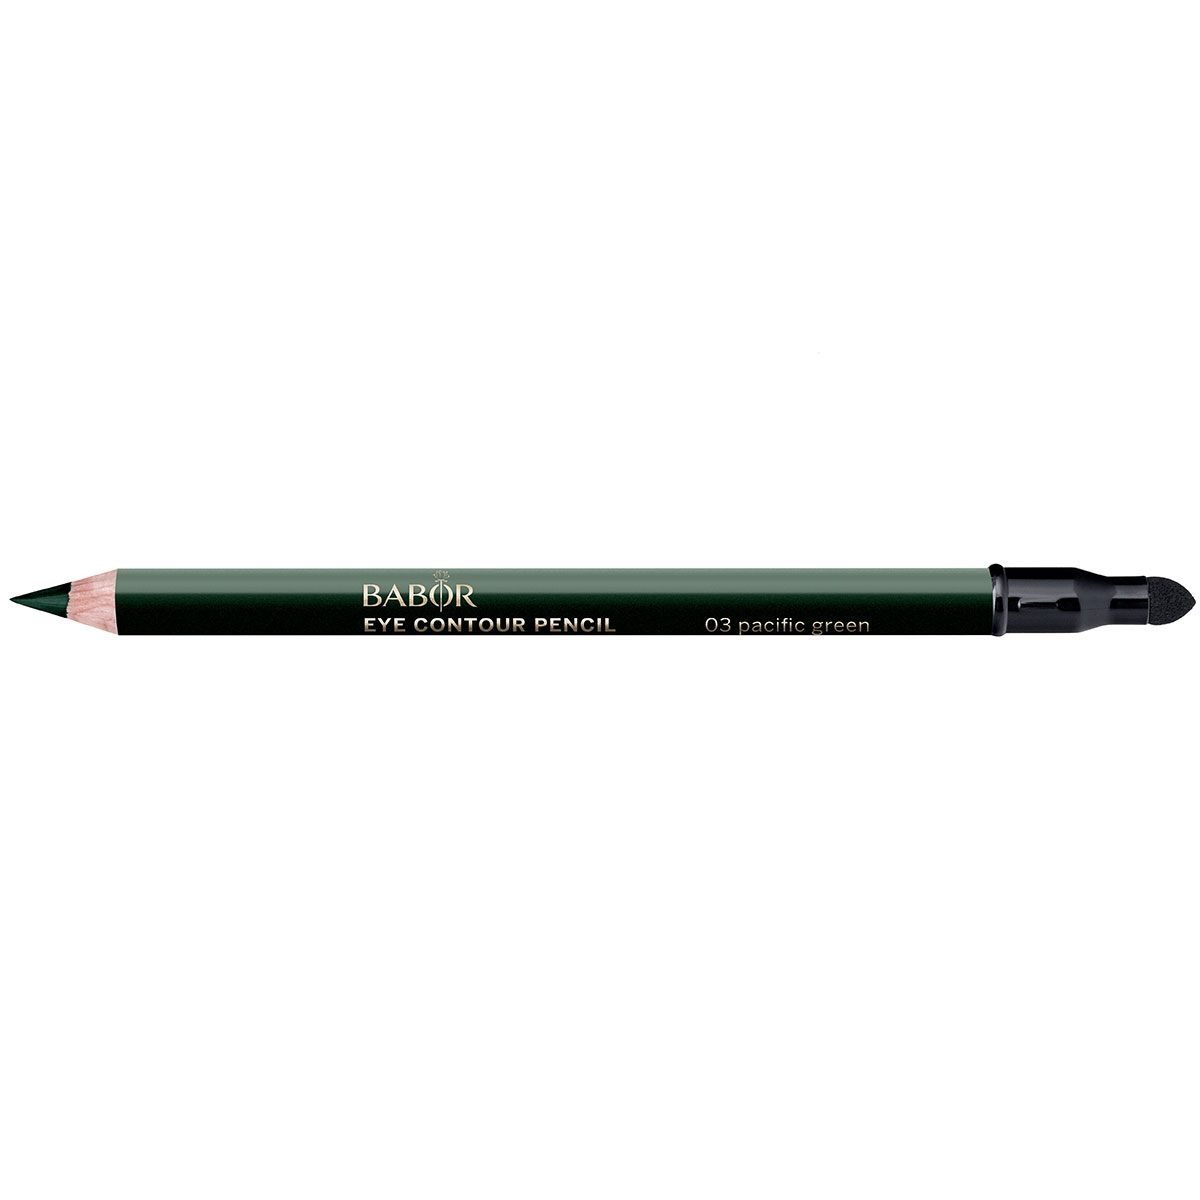 Контур для Век, тон 03 тёмная бирюза/Eye Contour Pencil, 03 pacific green